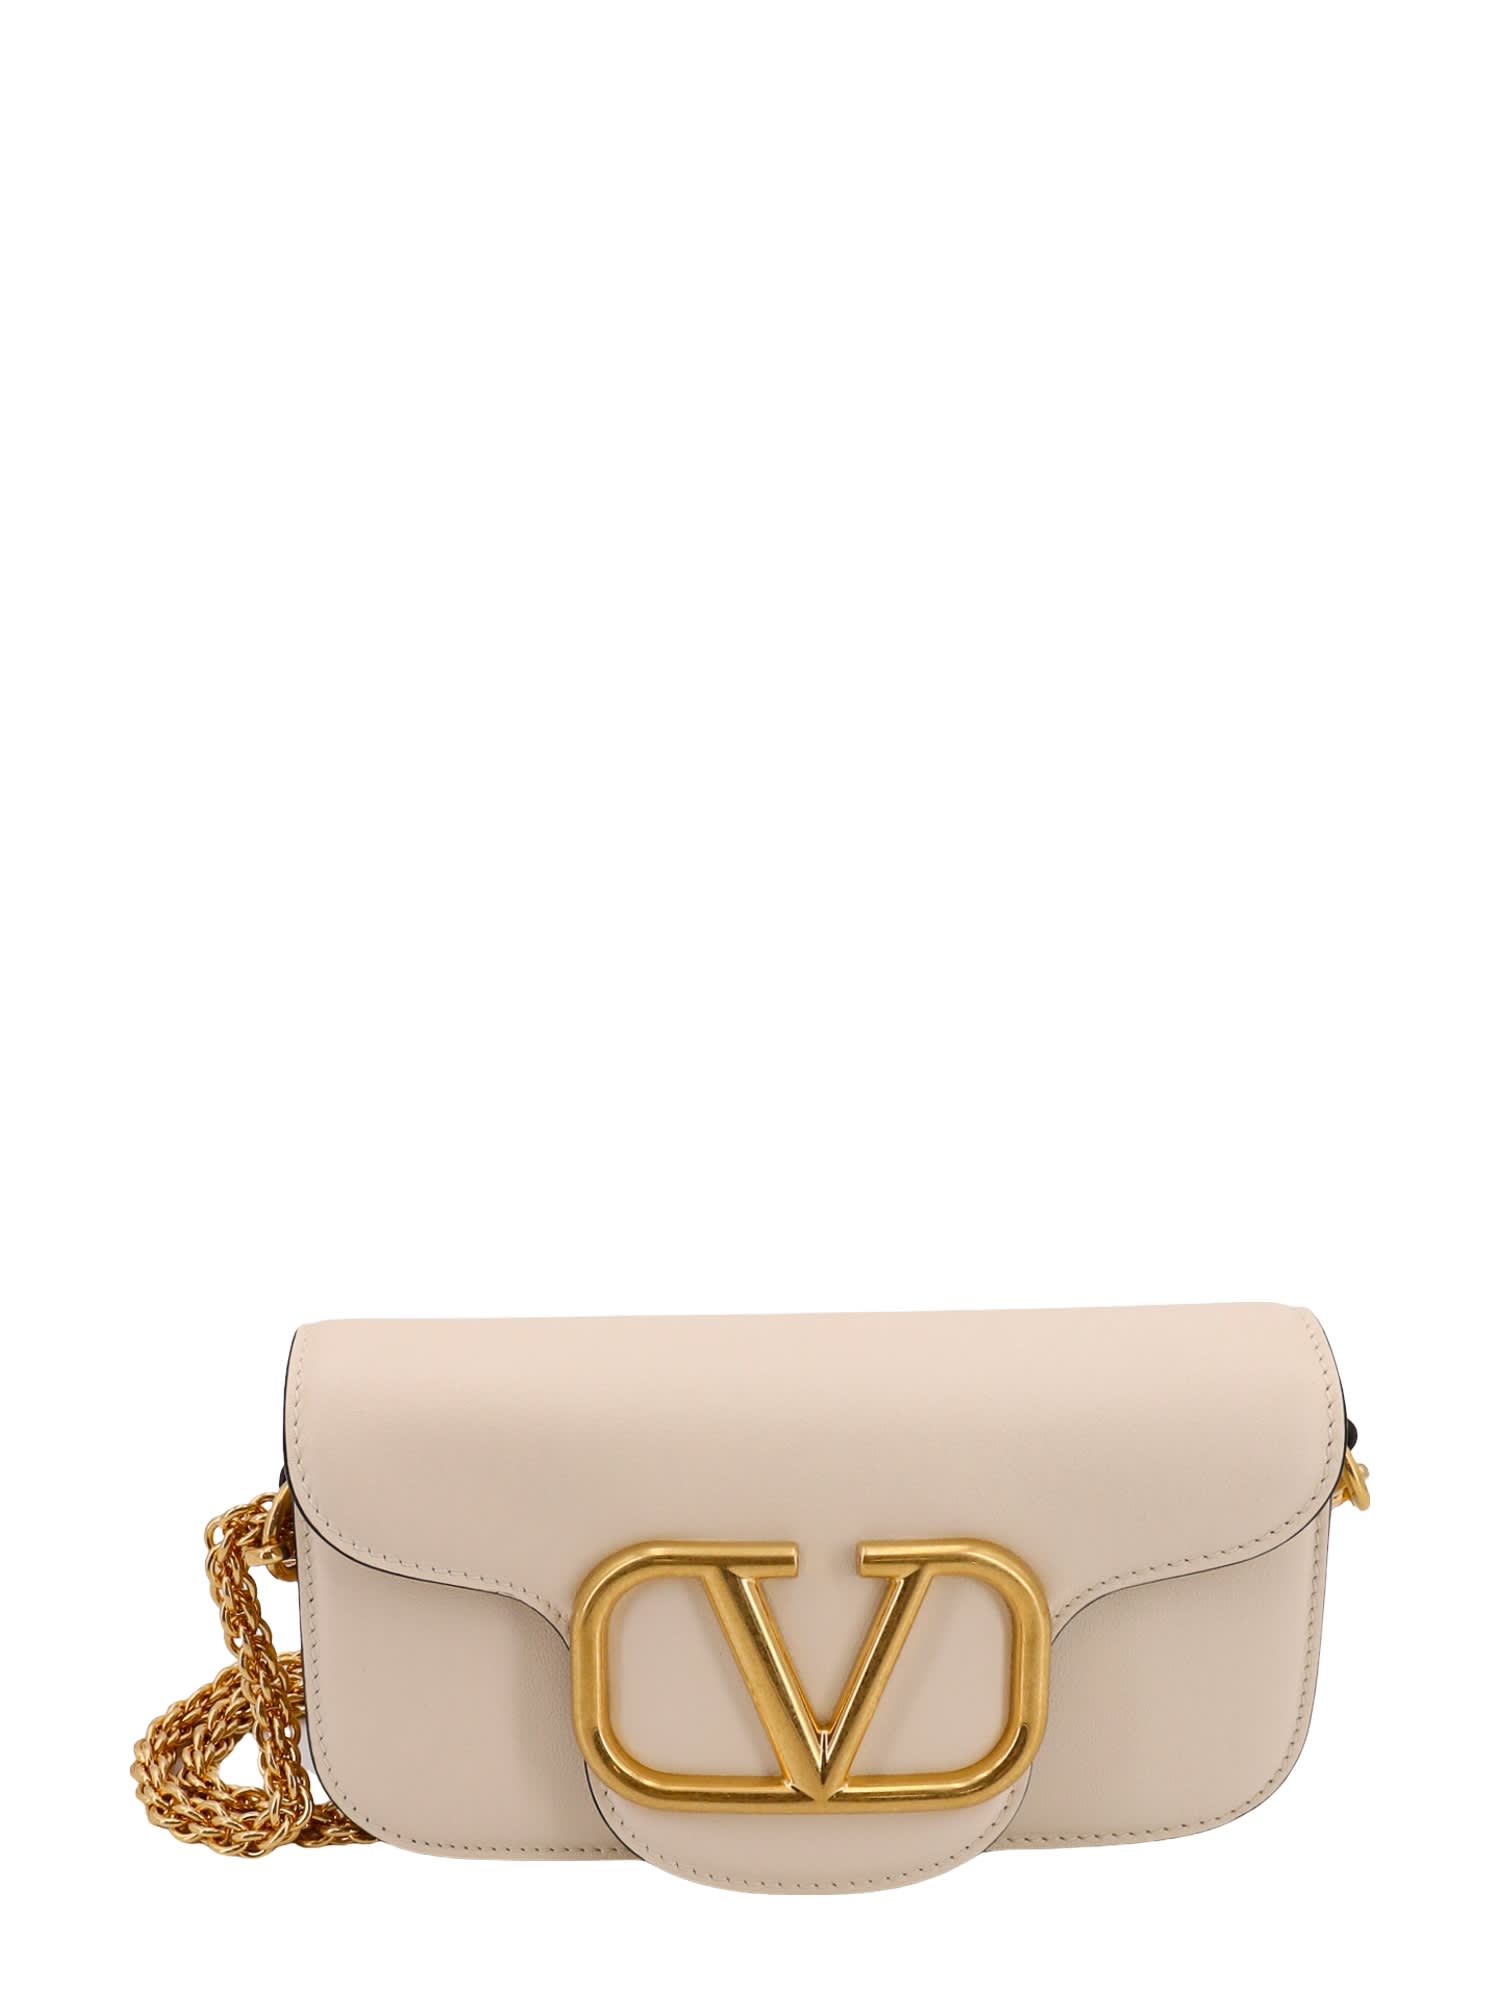 Valentino Garavani Mini VSling Crystal & Paillette Top Handle Bag in Mv6  Light Peach/Rose Mist